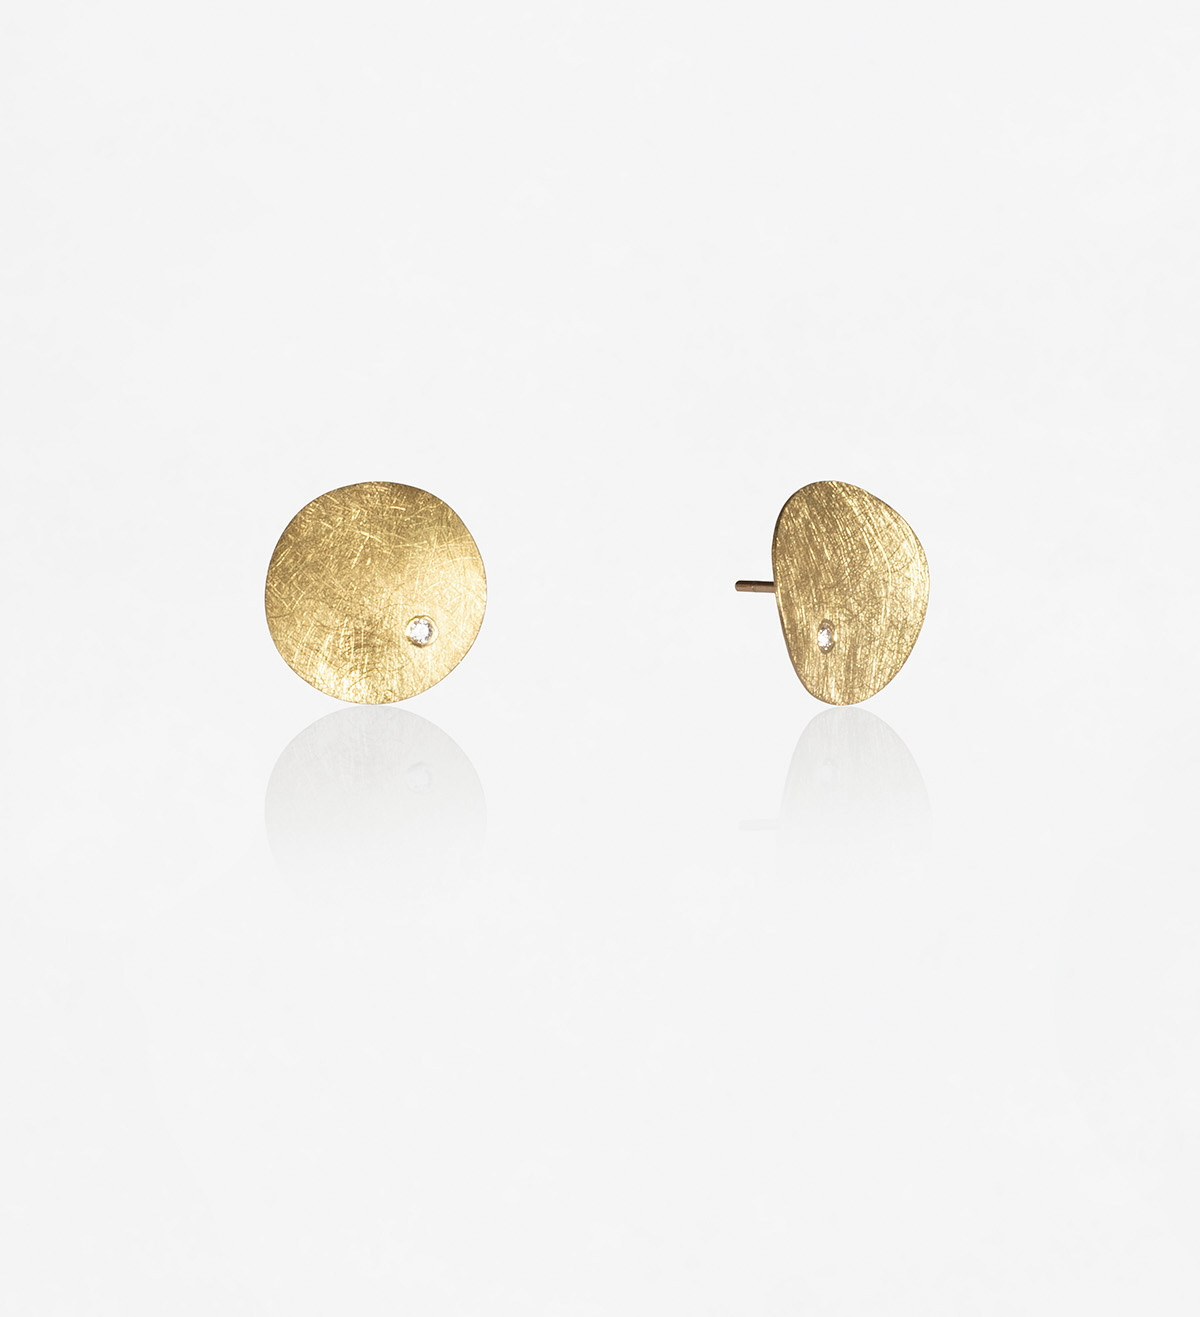 18K gold earrings Xips 15mm with Diamonds 0.05ct